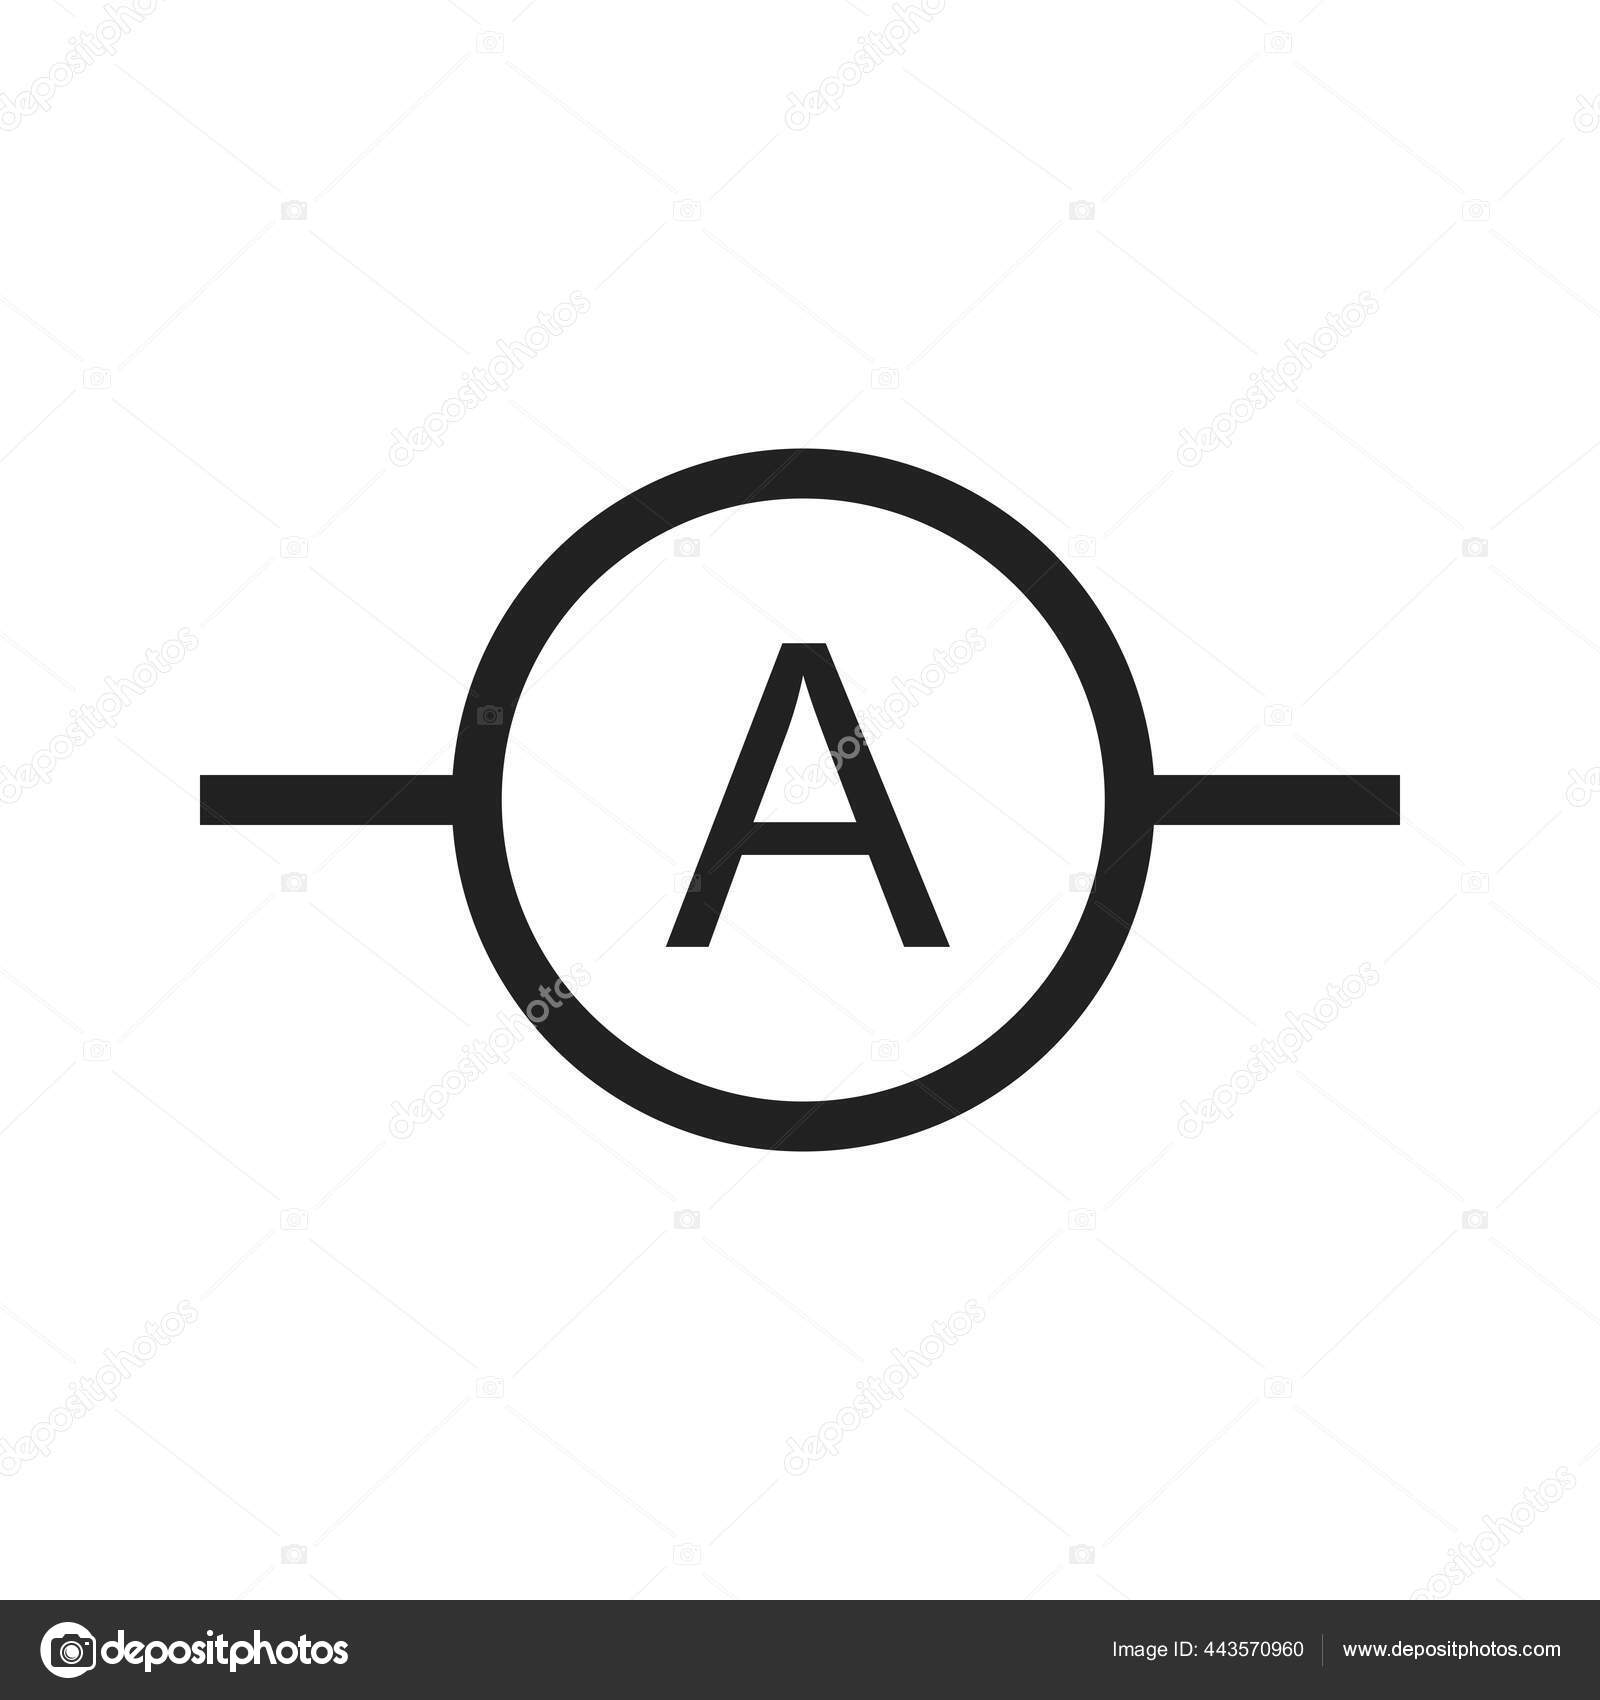 ammeter symbol